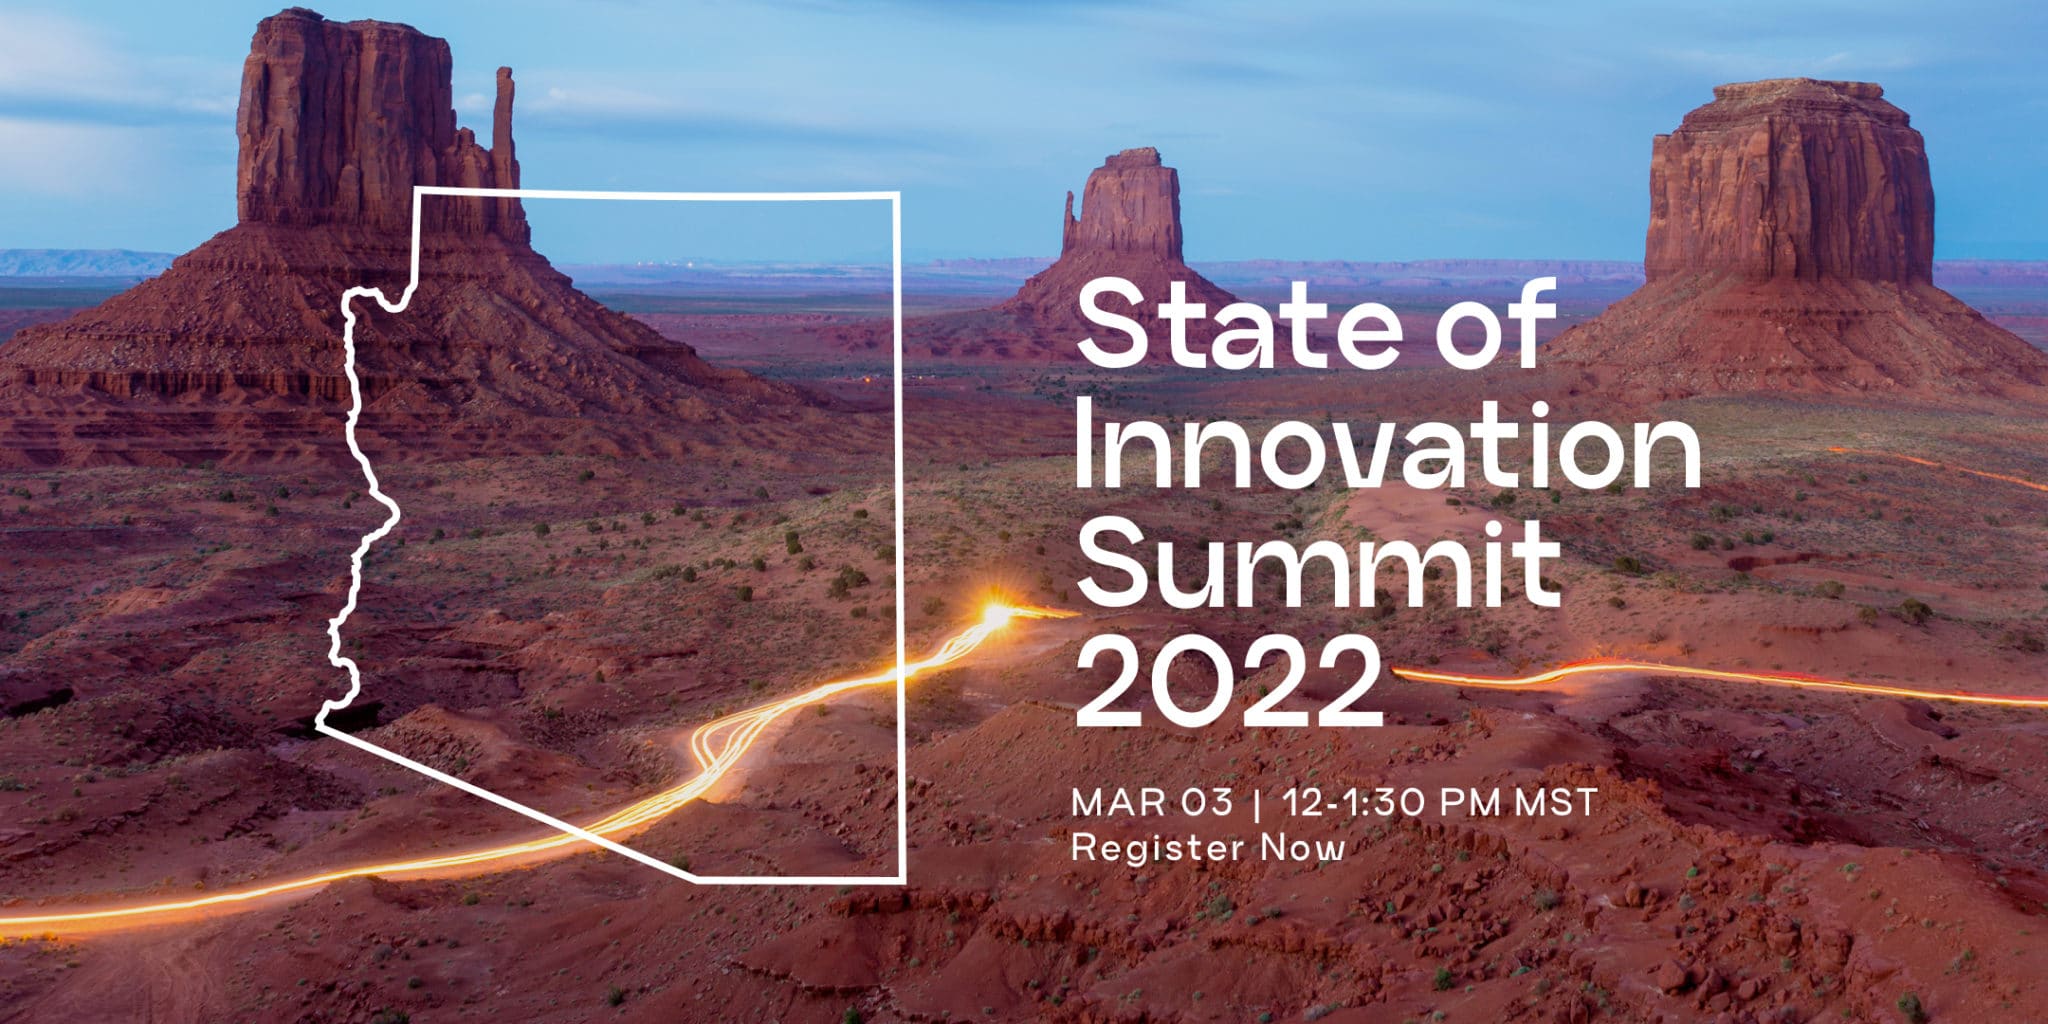 Partnership for Economic Innovation to Host Arizona’s 2022 State of Innovation Summit